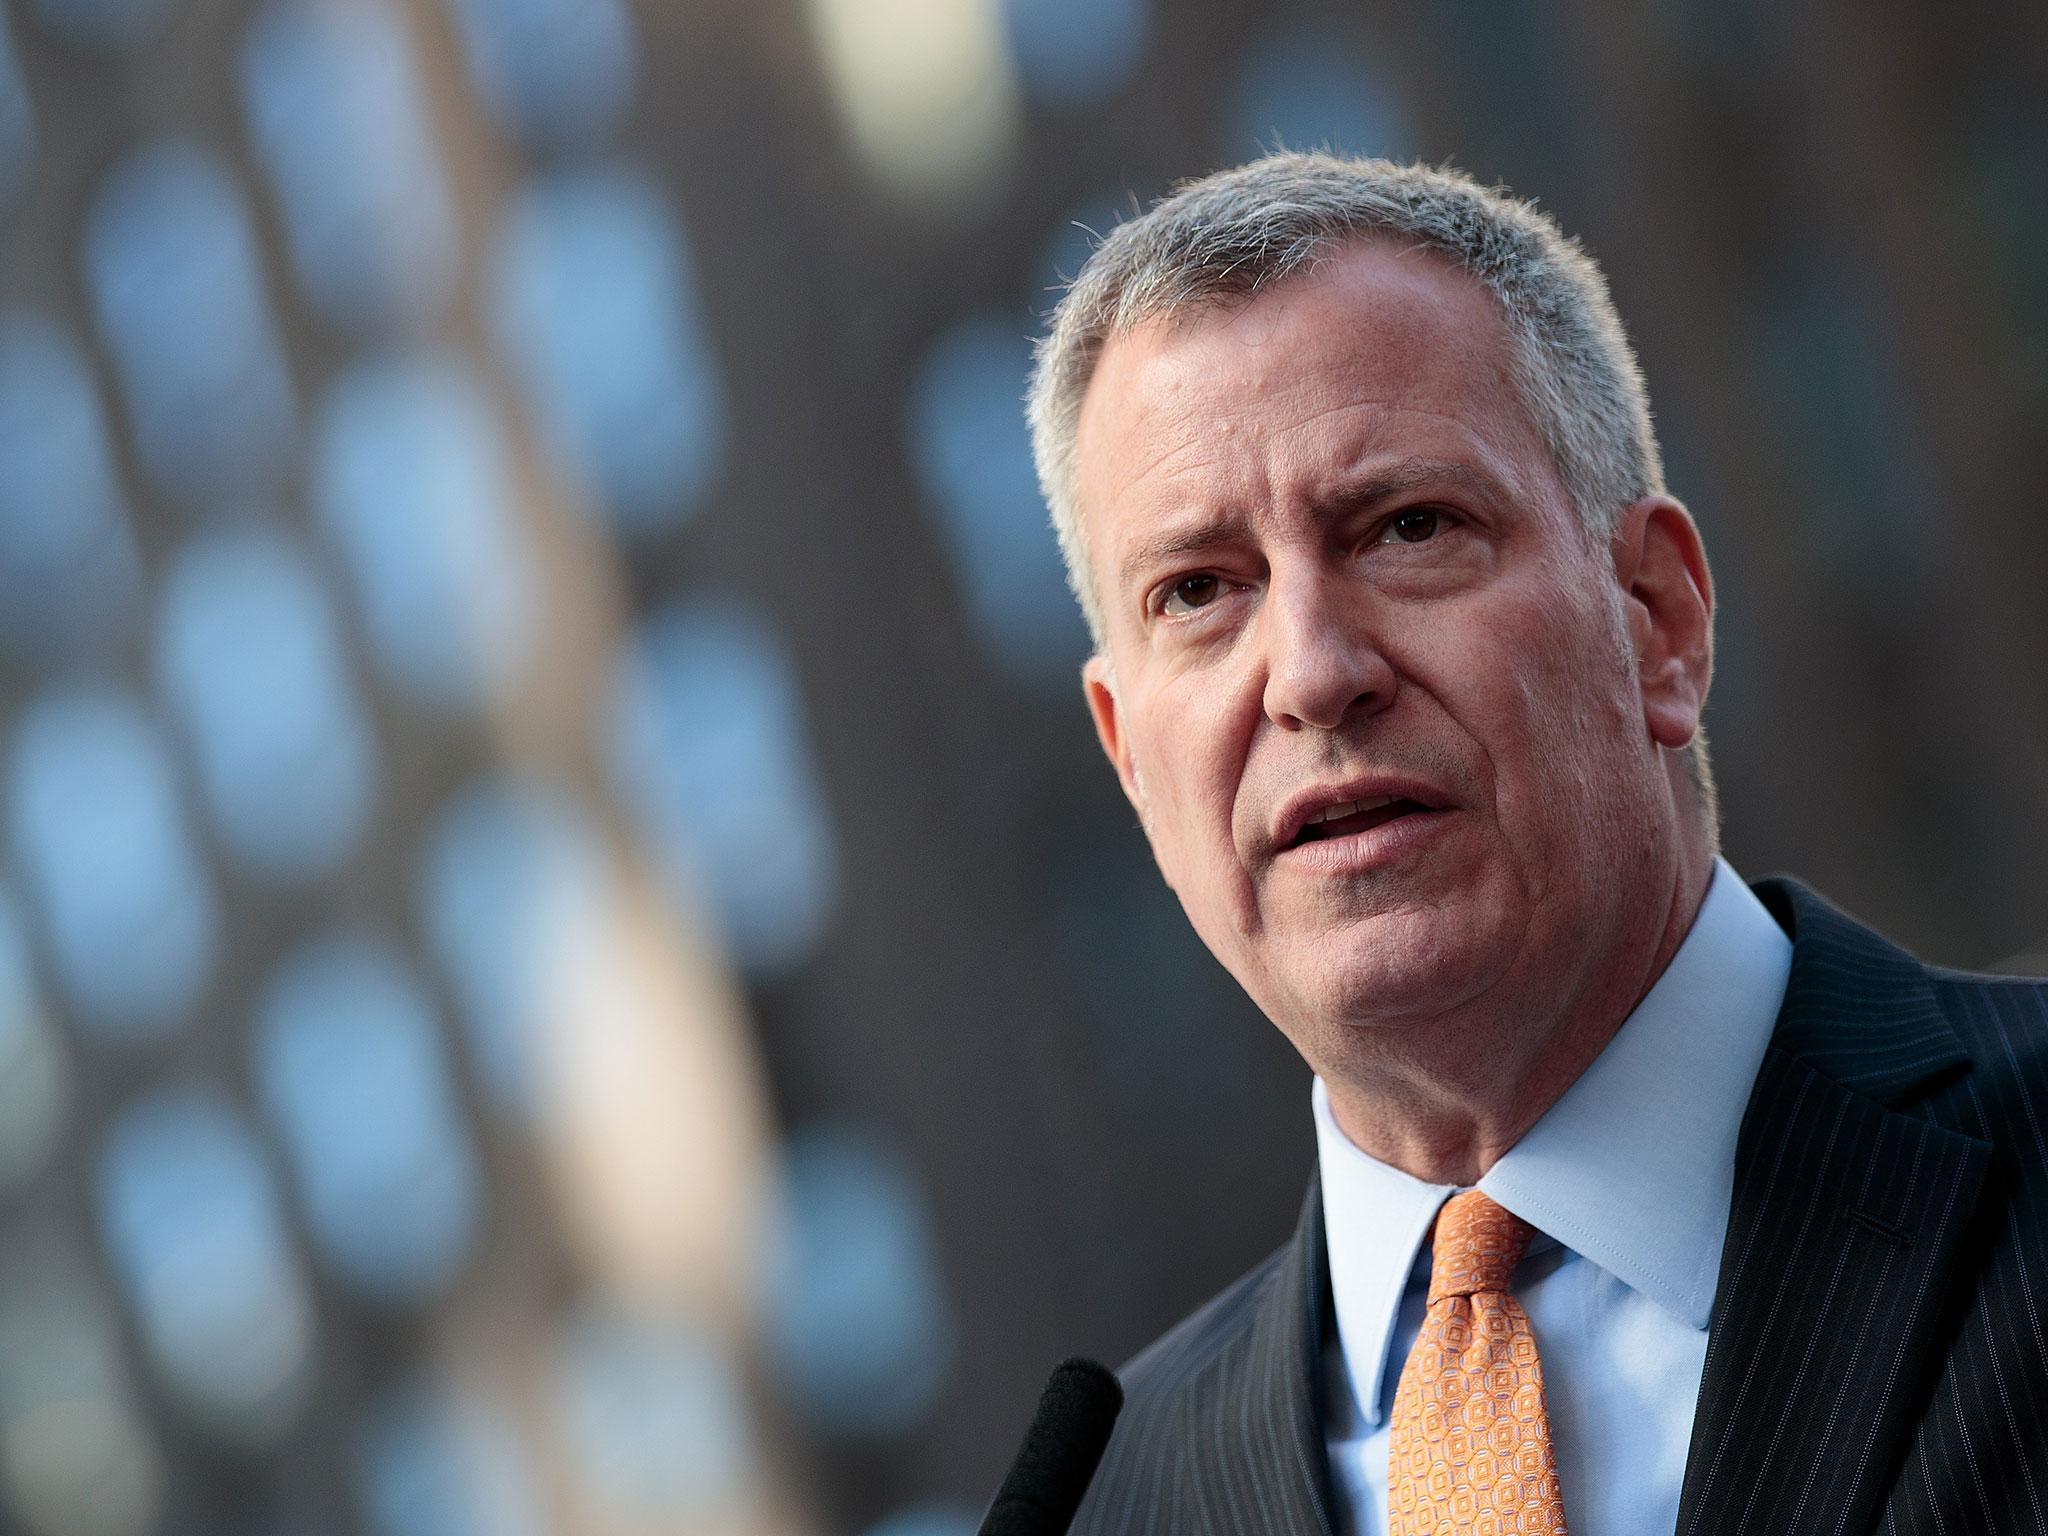 Bill de Blasio, the Democrat mayor of New York City, said withdrawal would be 'hugely destructive'